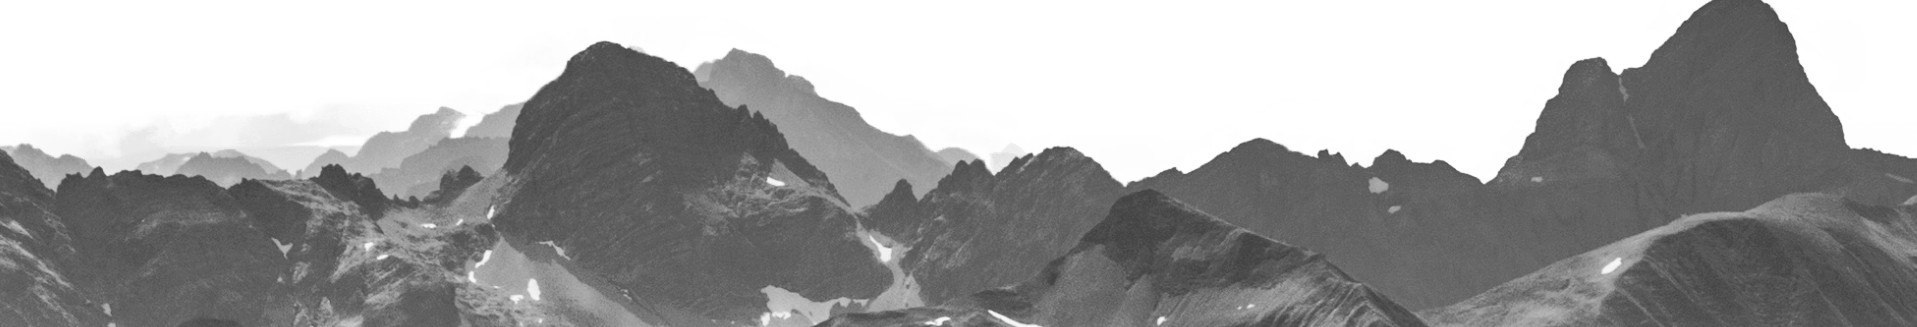 Cutout of mountains